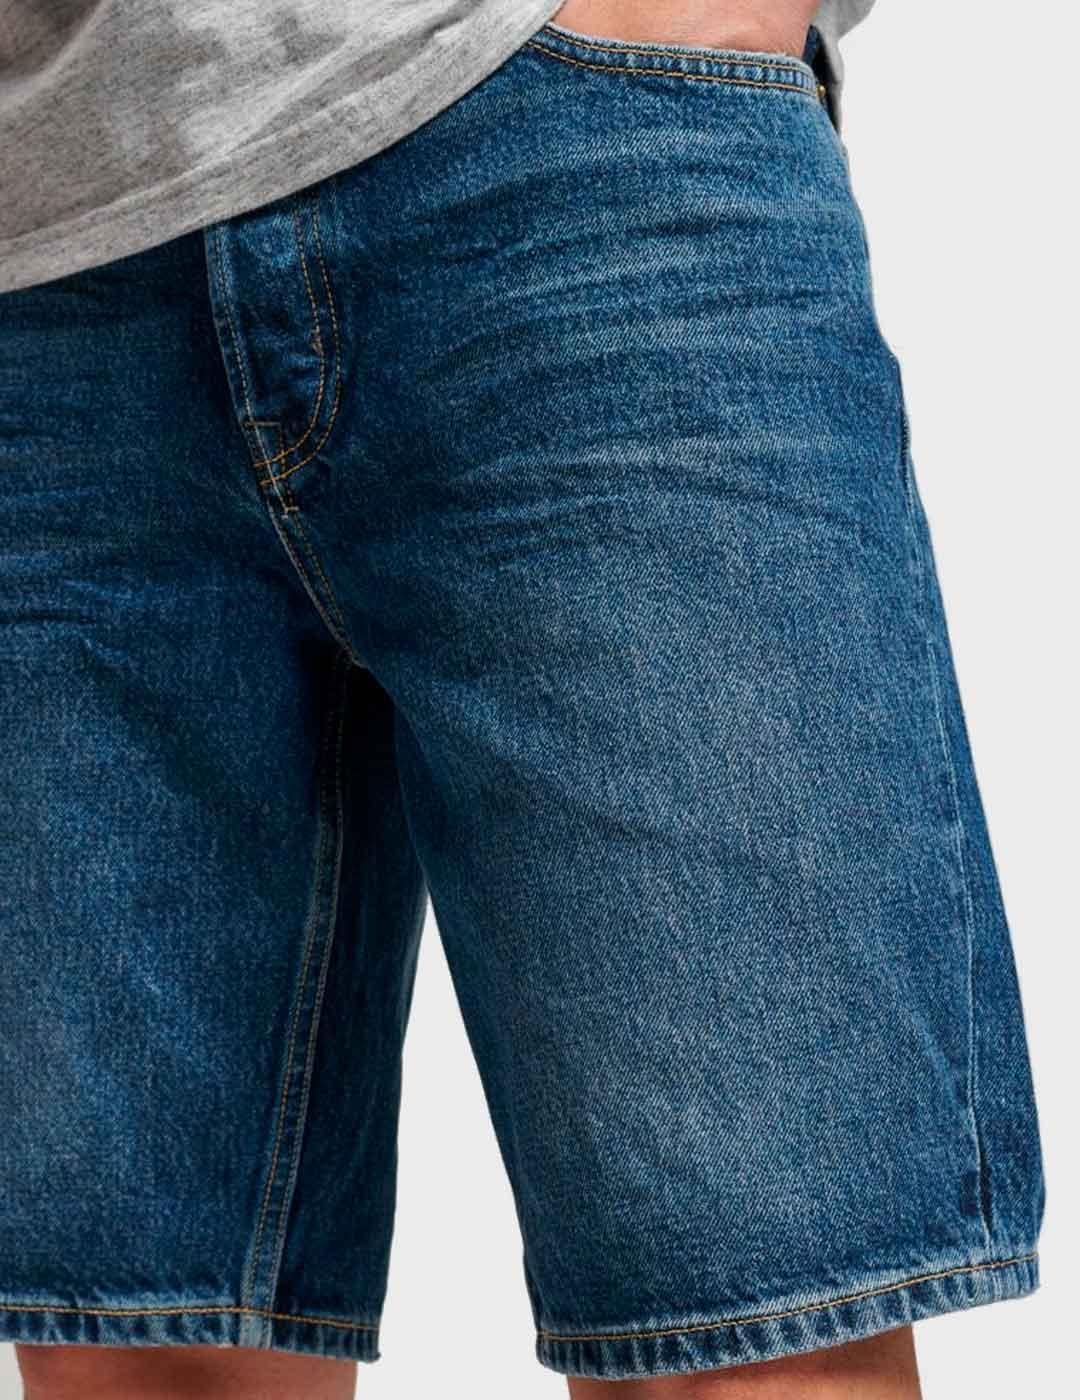 Pantalón corto Vintage Straight Short azul para hombre